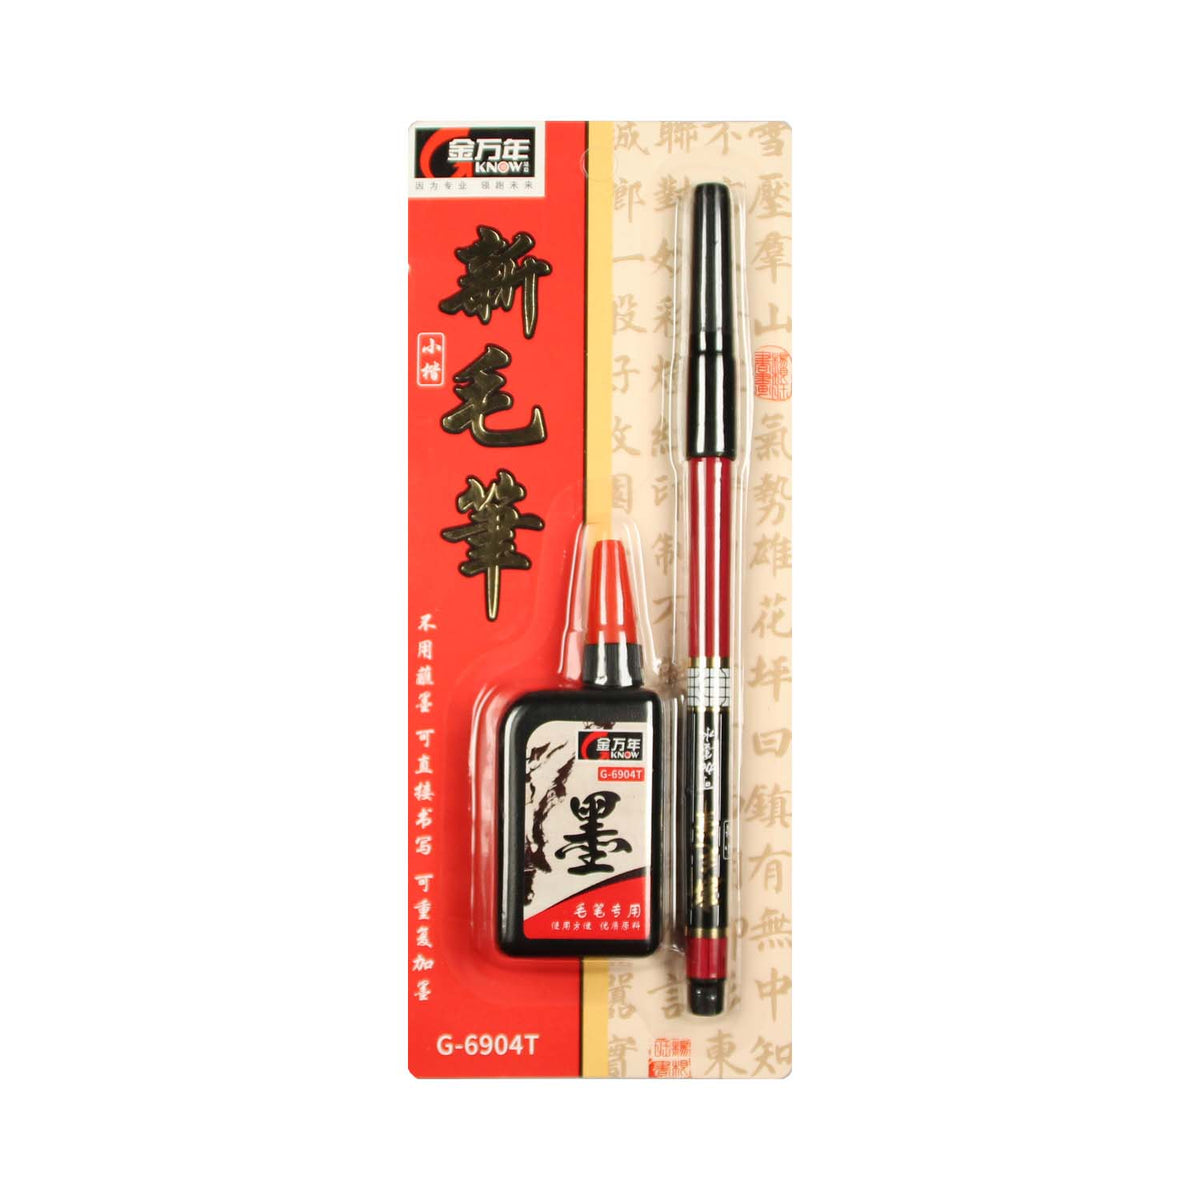 Ami / Brush Pen / Schwarz / nachfüllbar